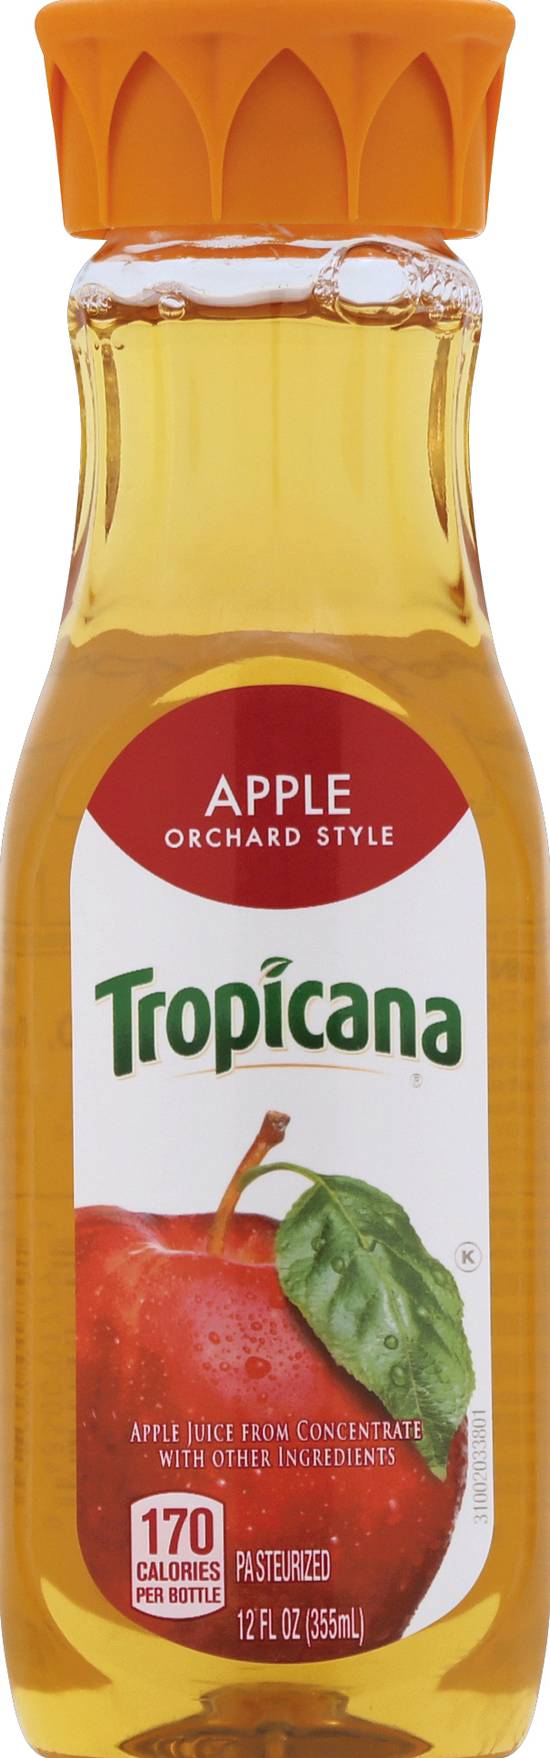 Tropicana Orchard Style Apple Juice (12 fl oz)